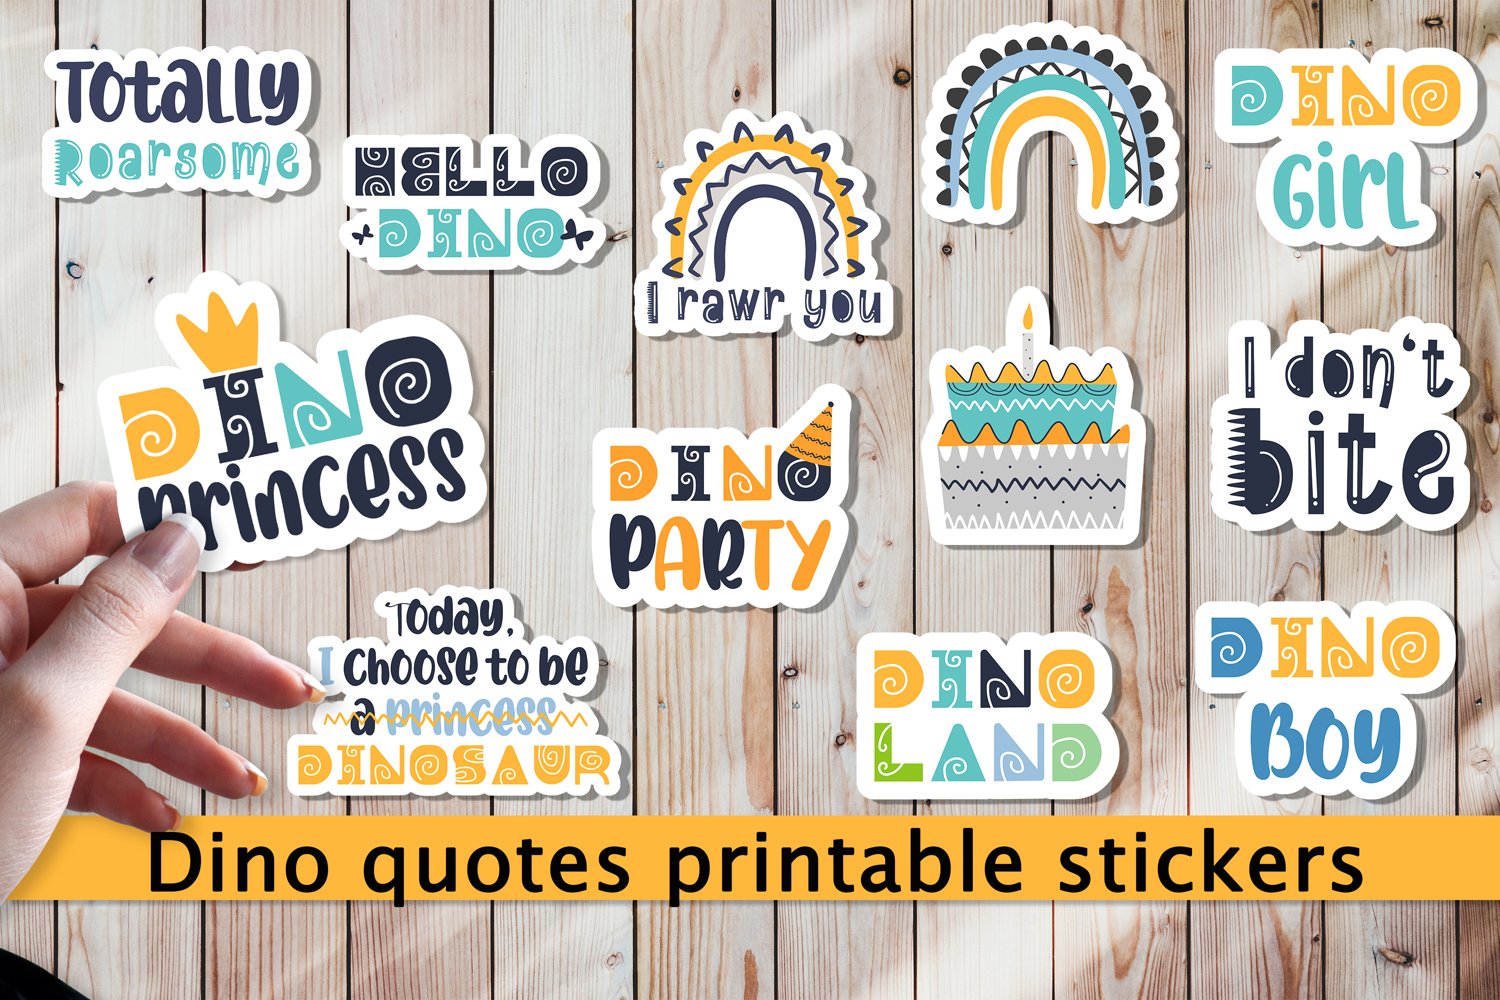 Dino quotes printable stickers.